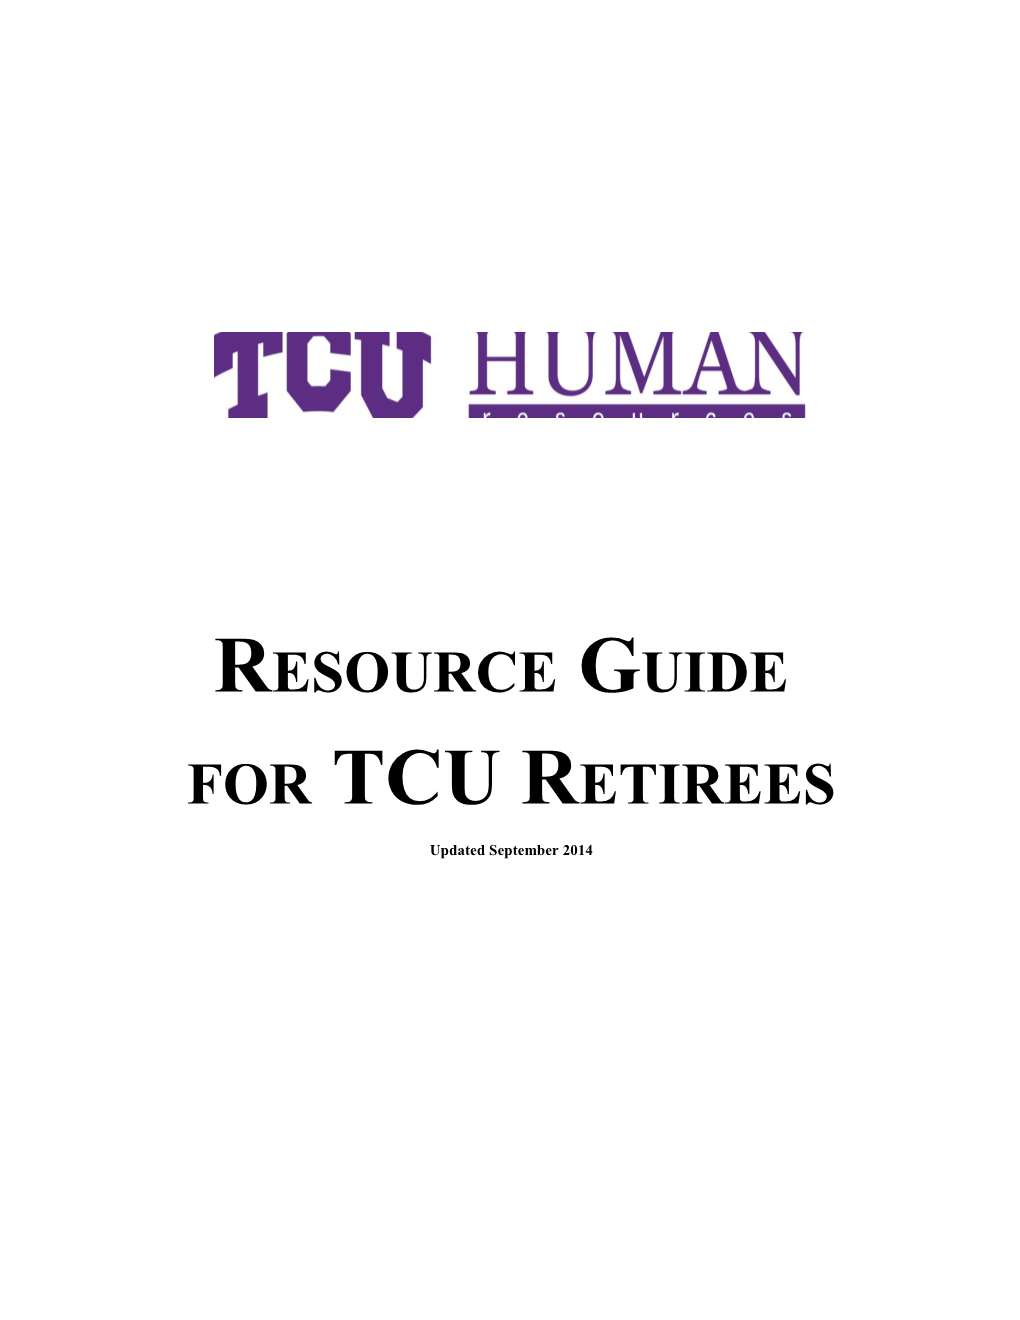 For TCU Retirees